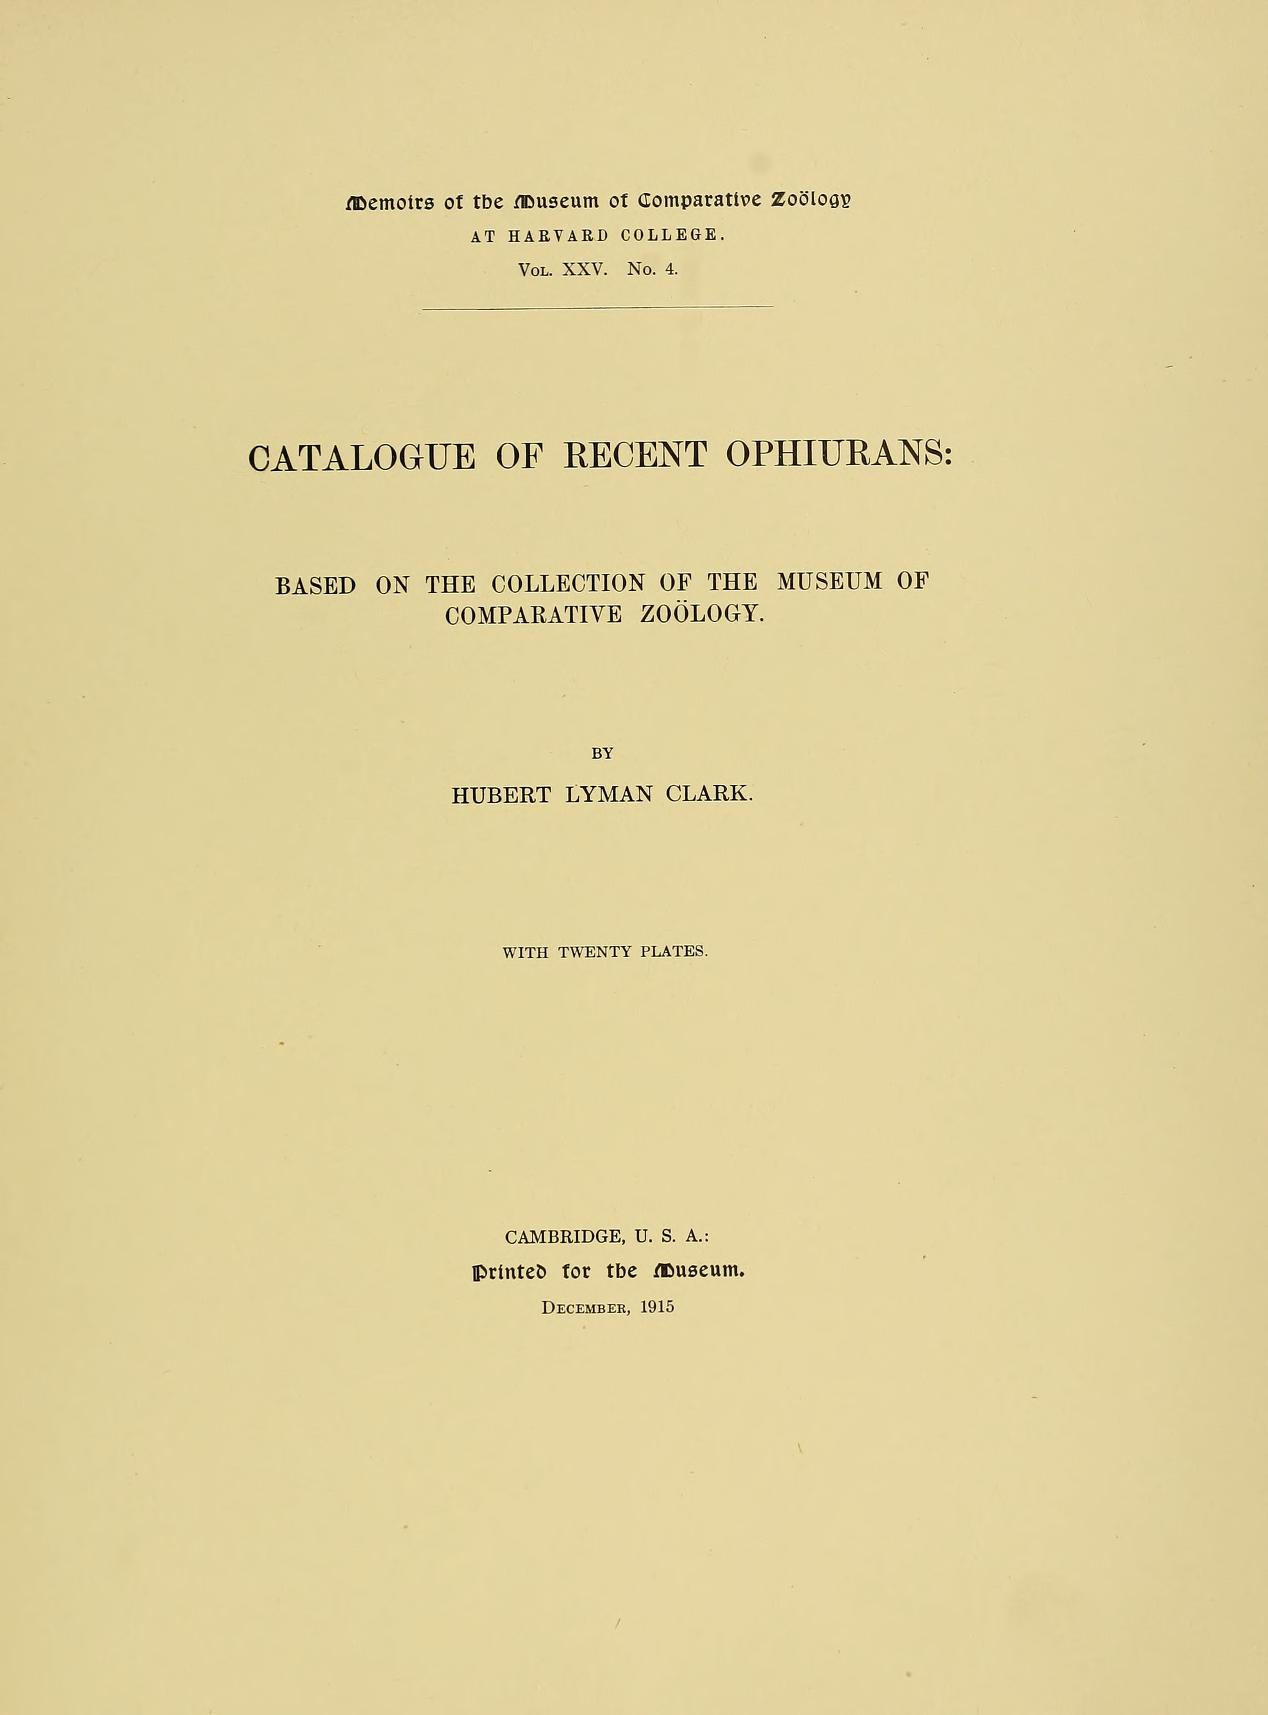 Media of type text, Clark 1915. Description:MCZ Memoirs Vol. XXV no. 4